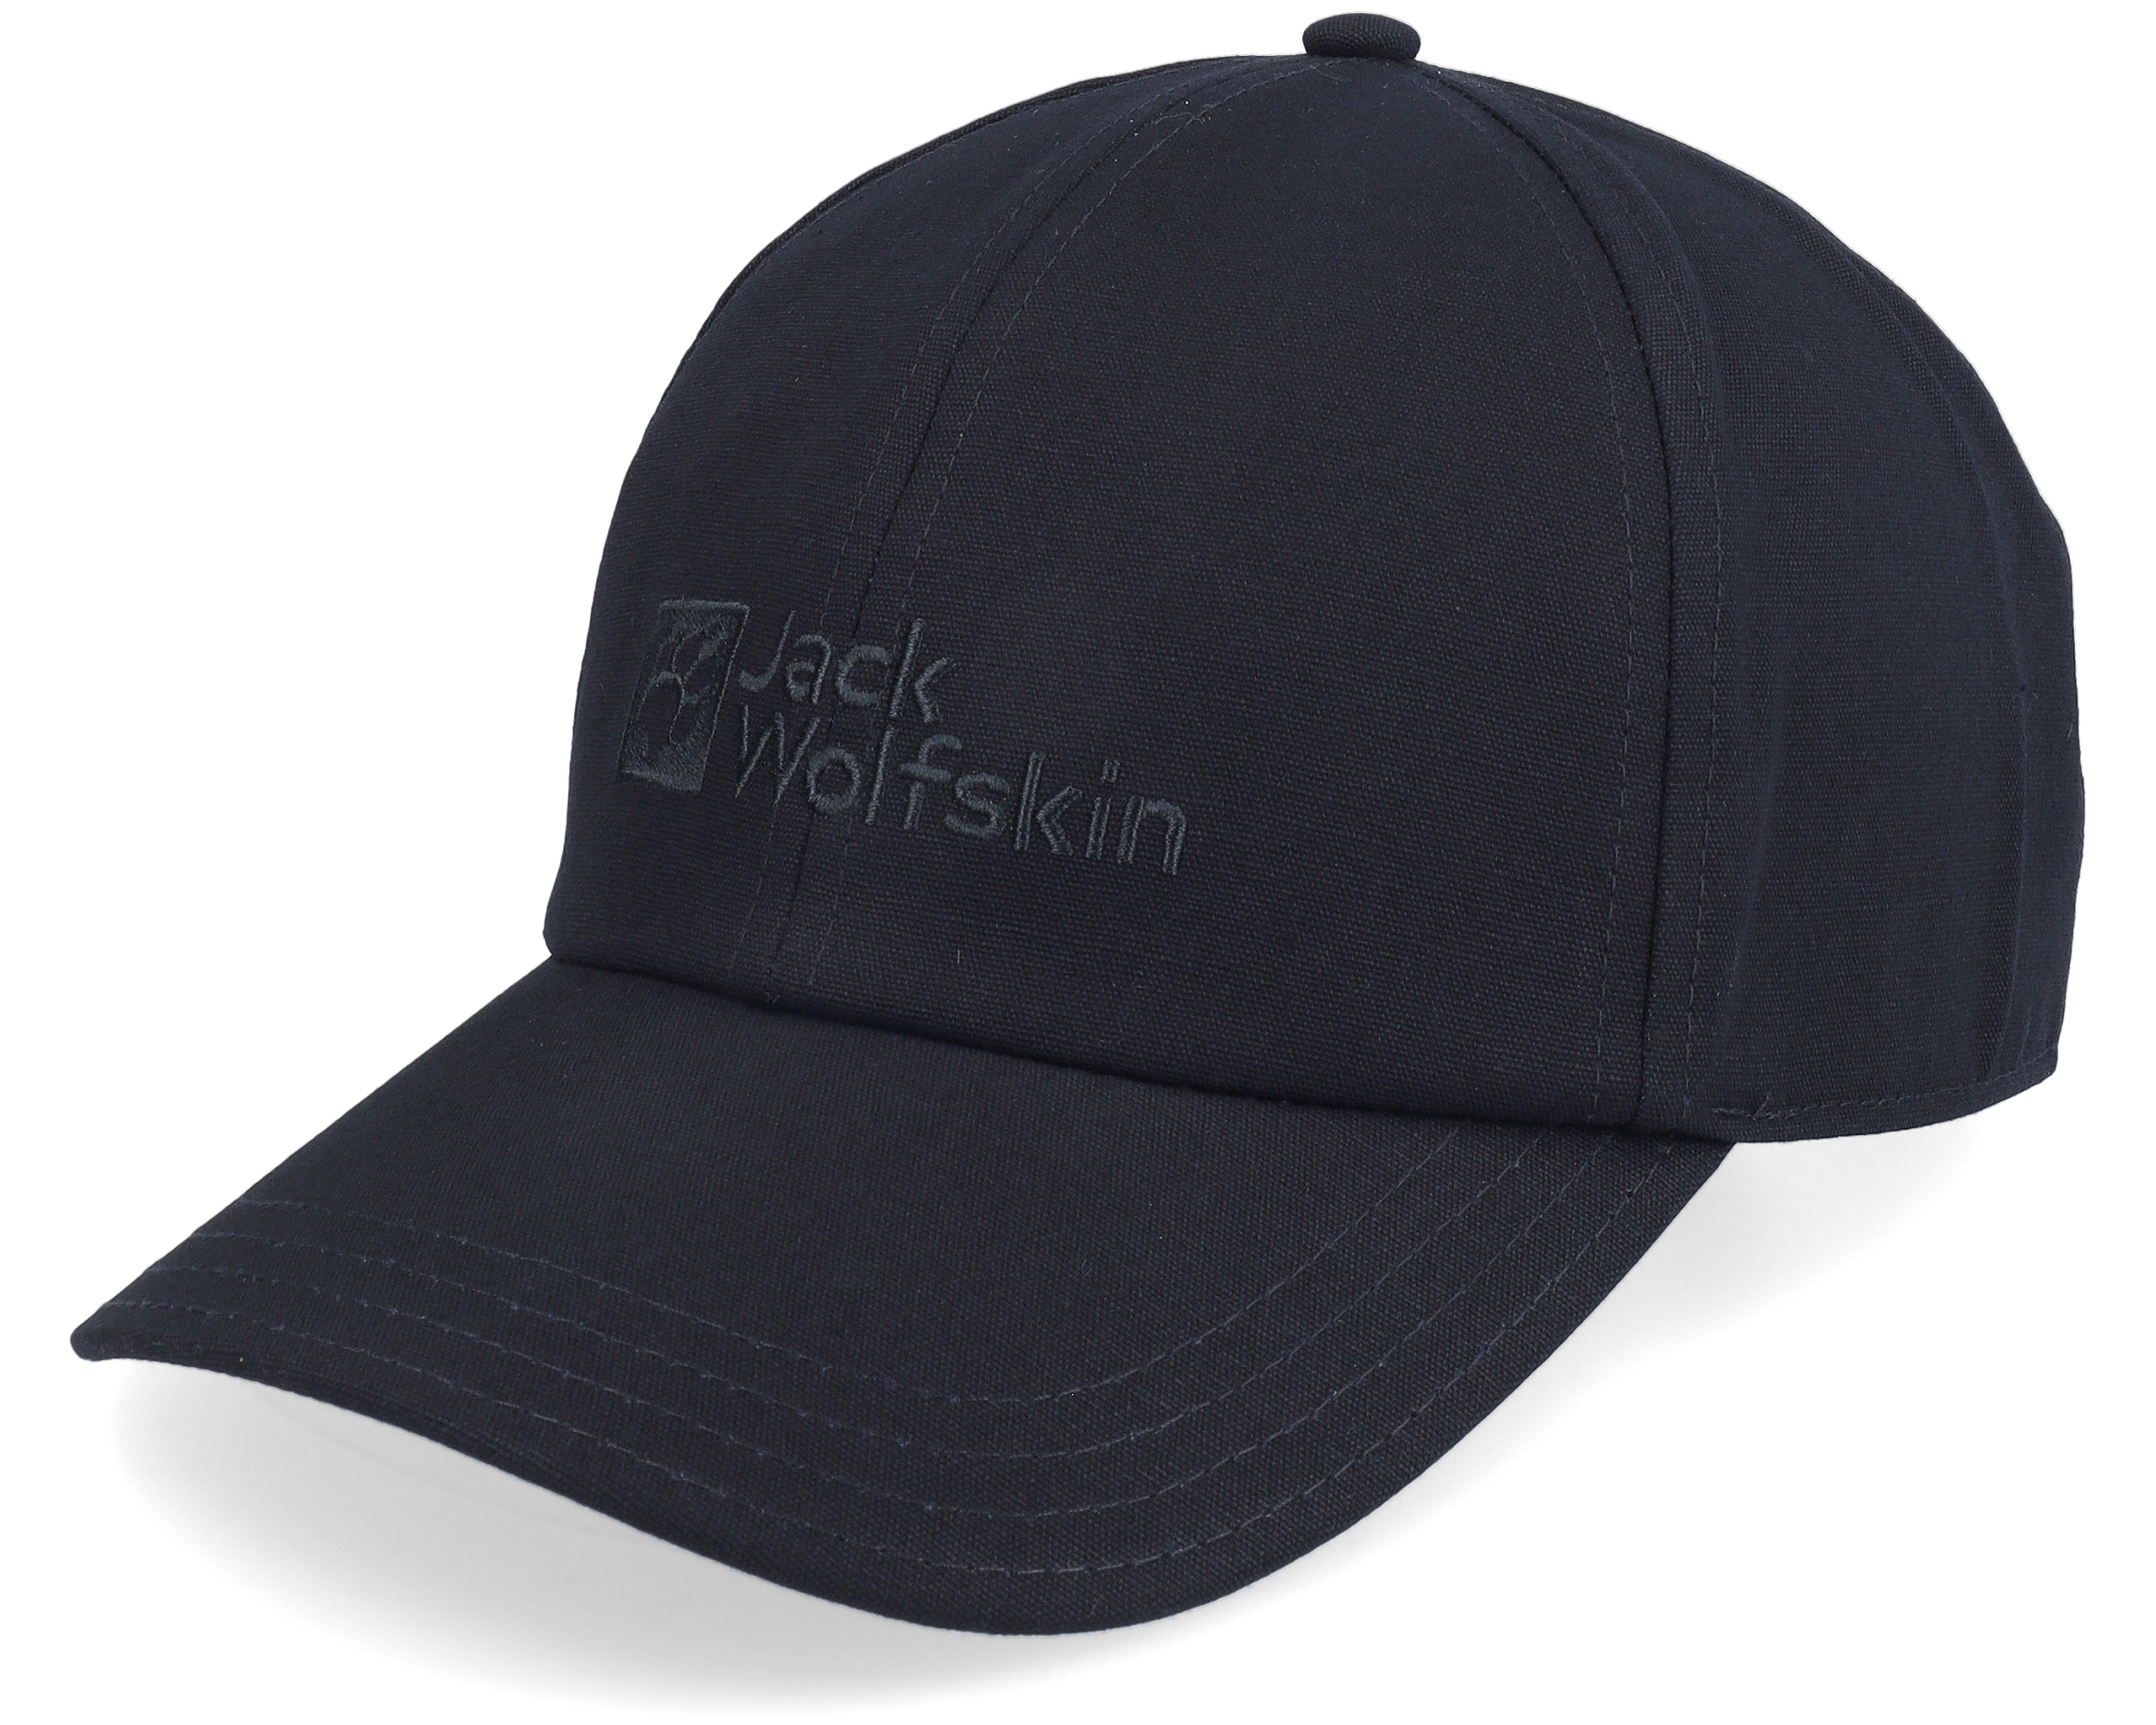 Baseball Cap Black Dad Cap - Jack Wolfskin cap